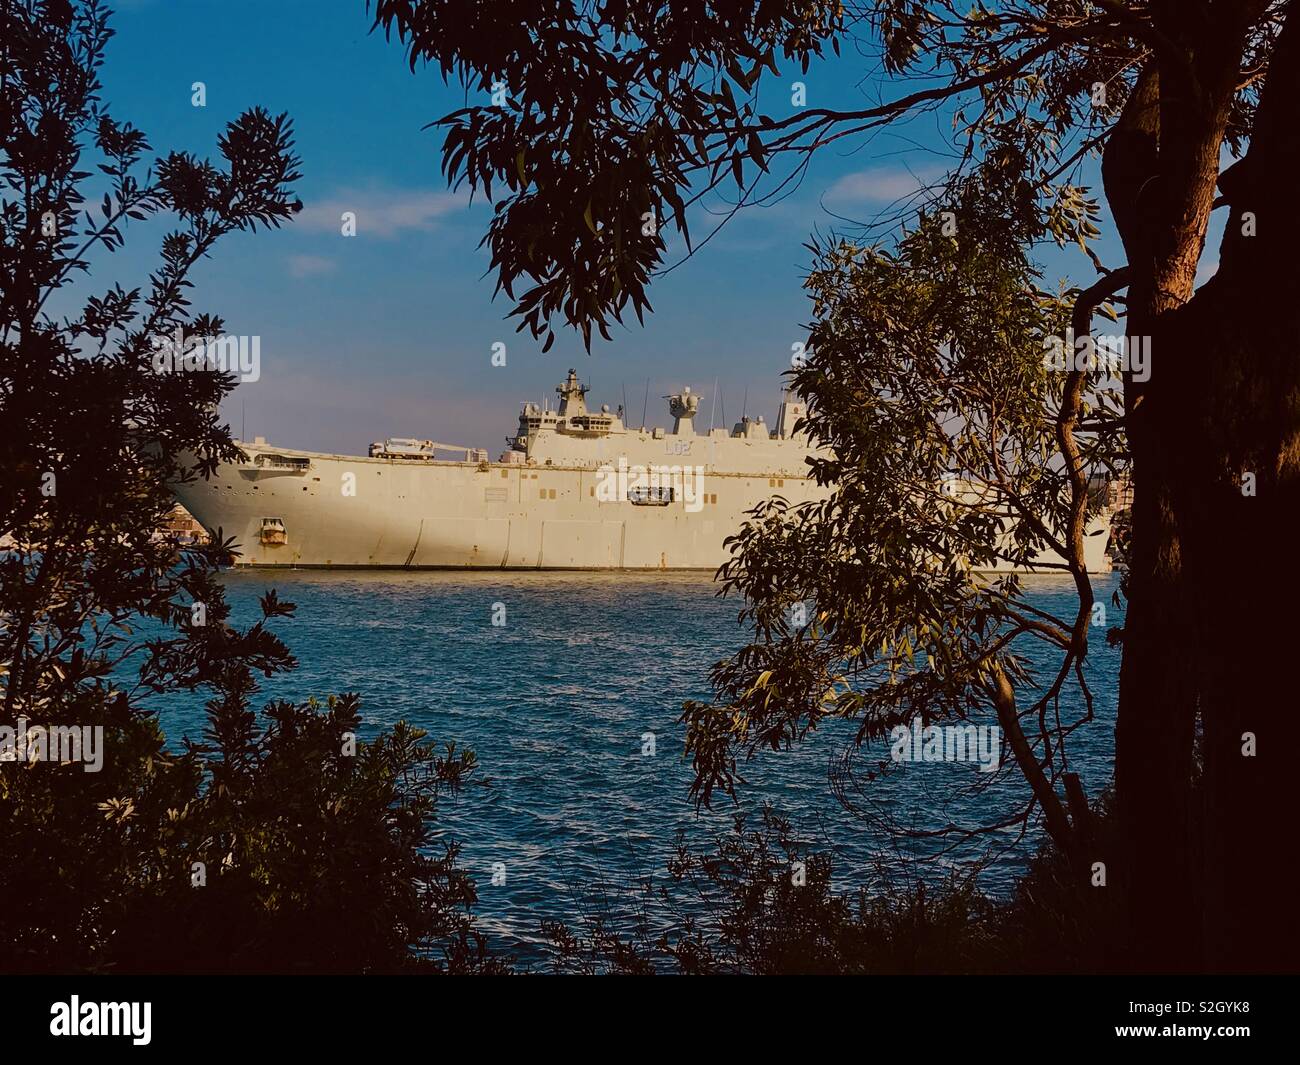 Military ship at Sydney Harbour, Australia, NSW Stock Photo